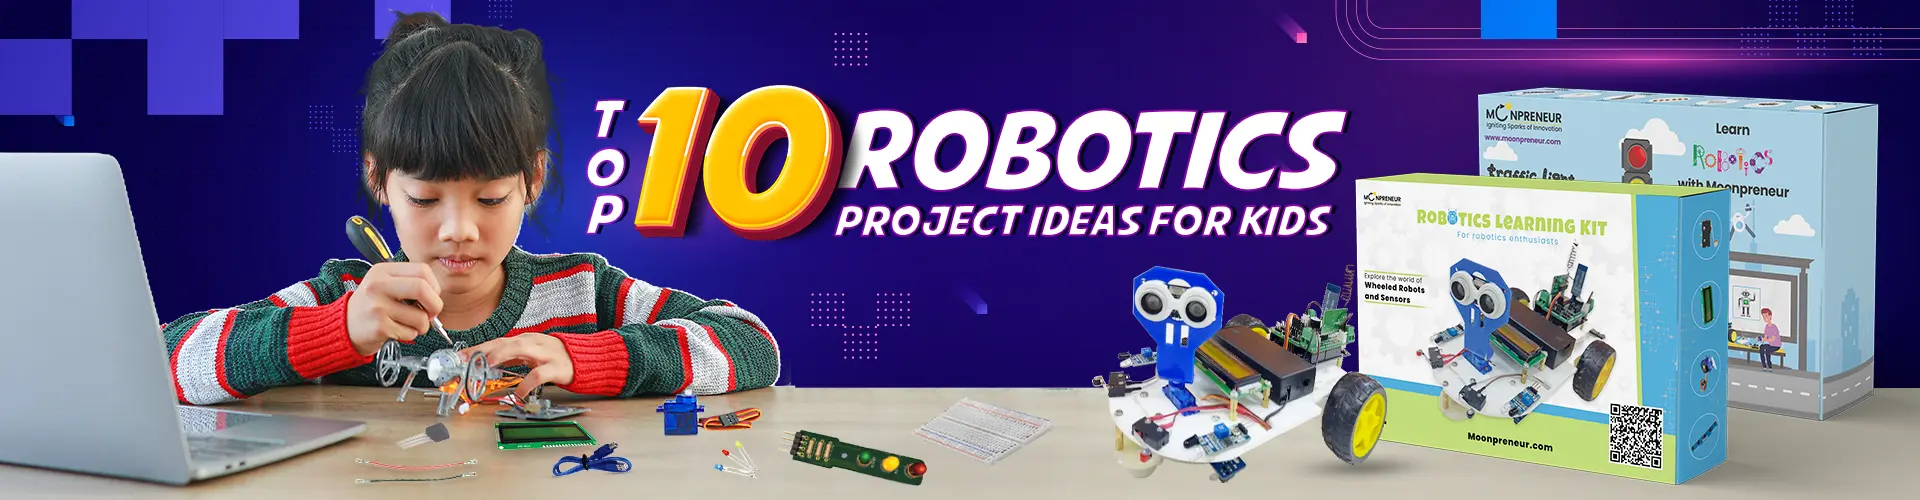 Top 10 Robotics Project Ideas for Kids